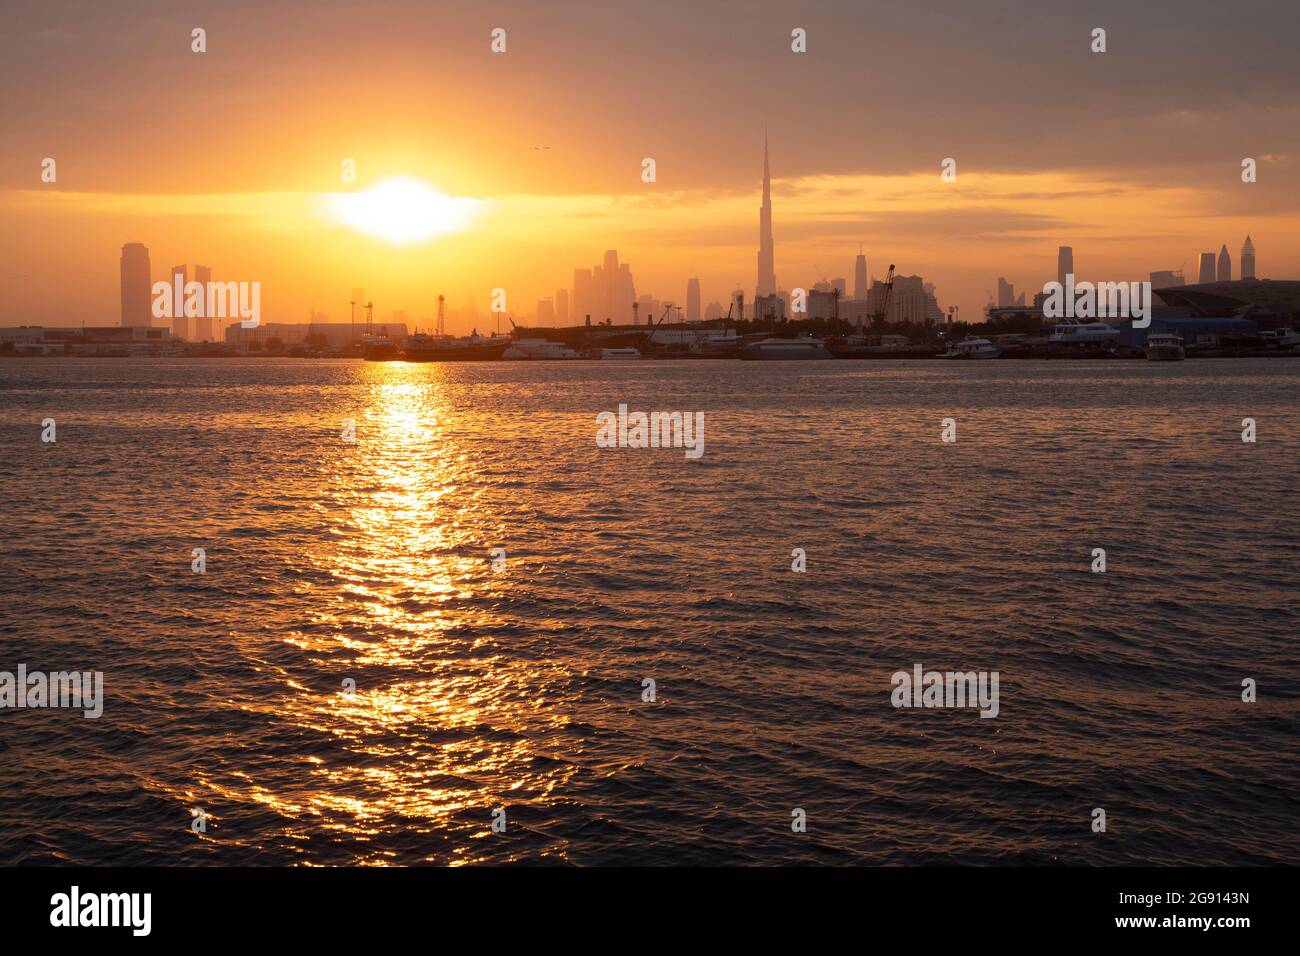 The Dubai skyline with Burj Khalifa at sunset as seen across the creek from Festival City. Dubai, UAE. Stock Photo